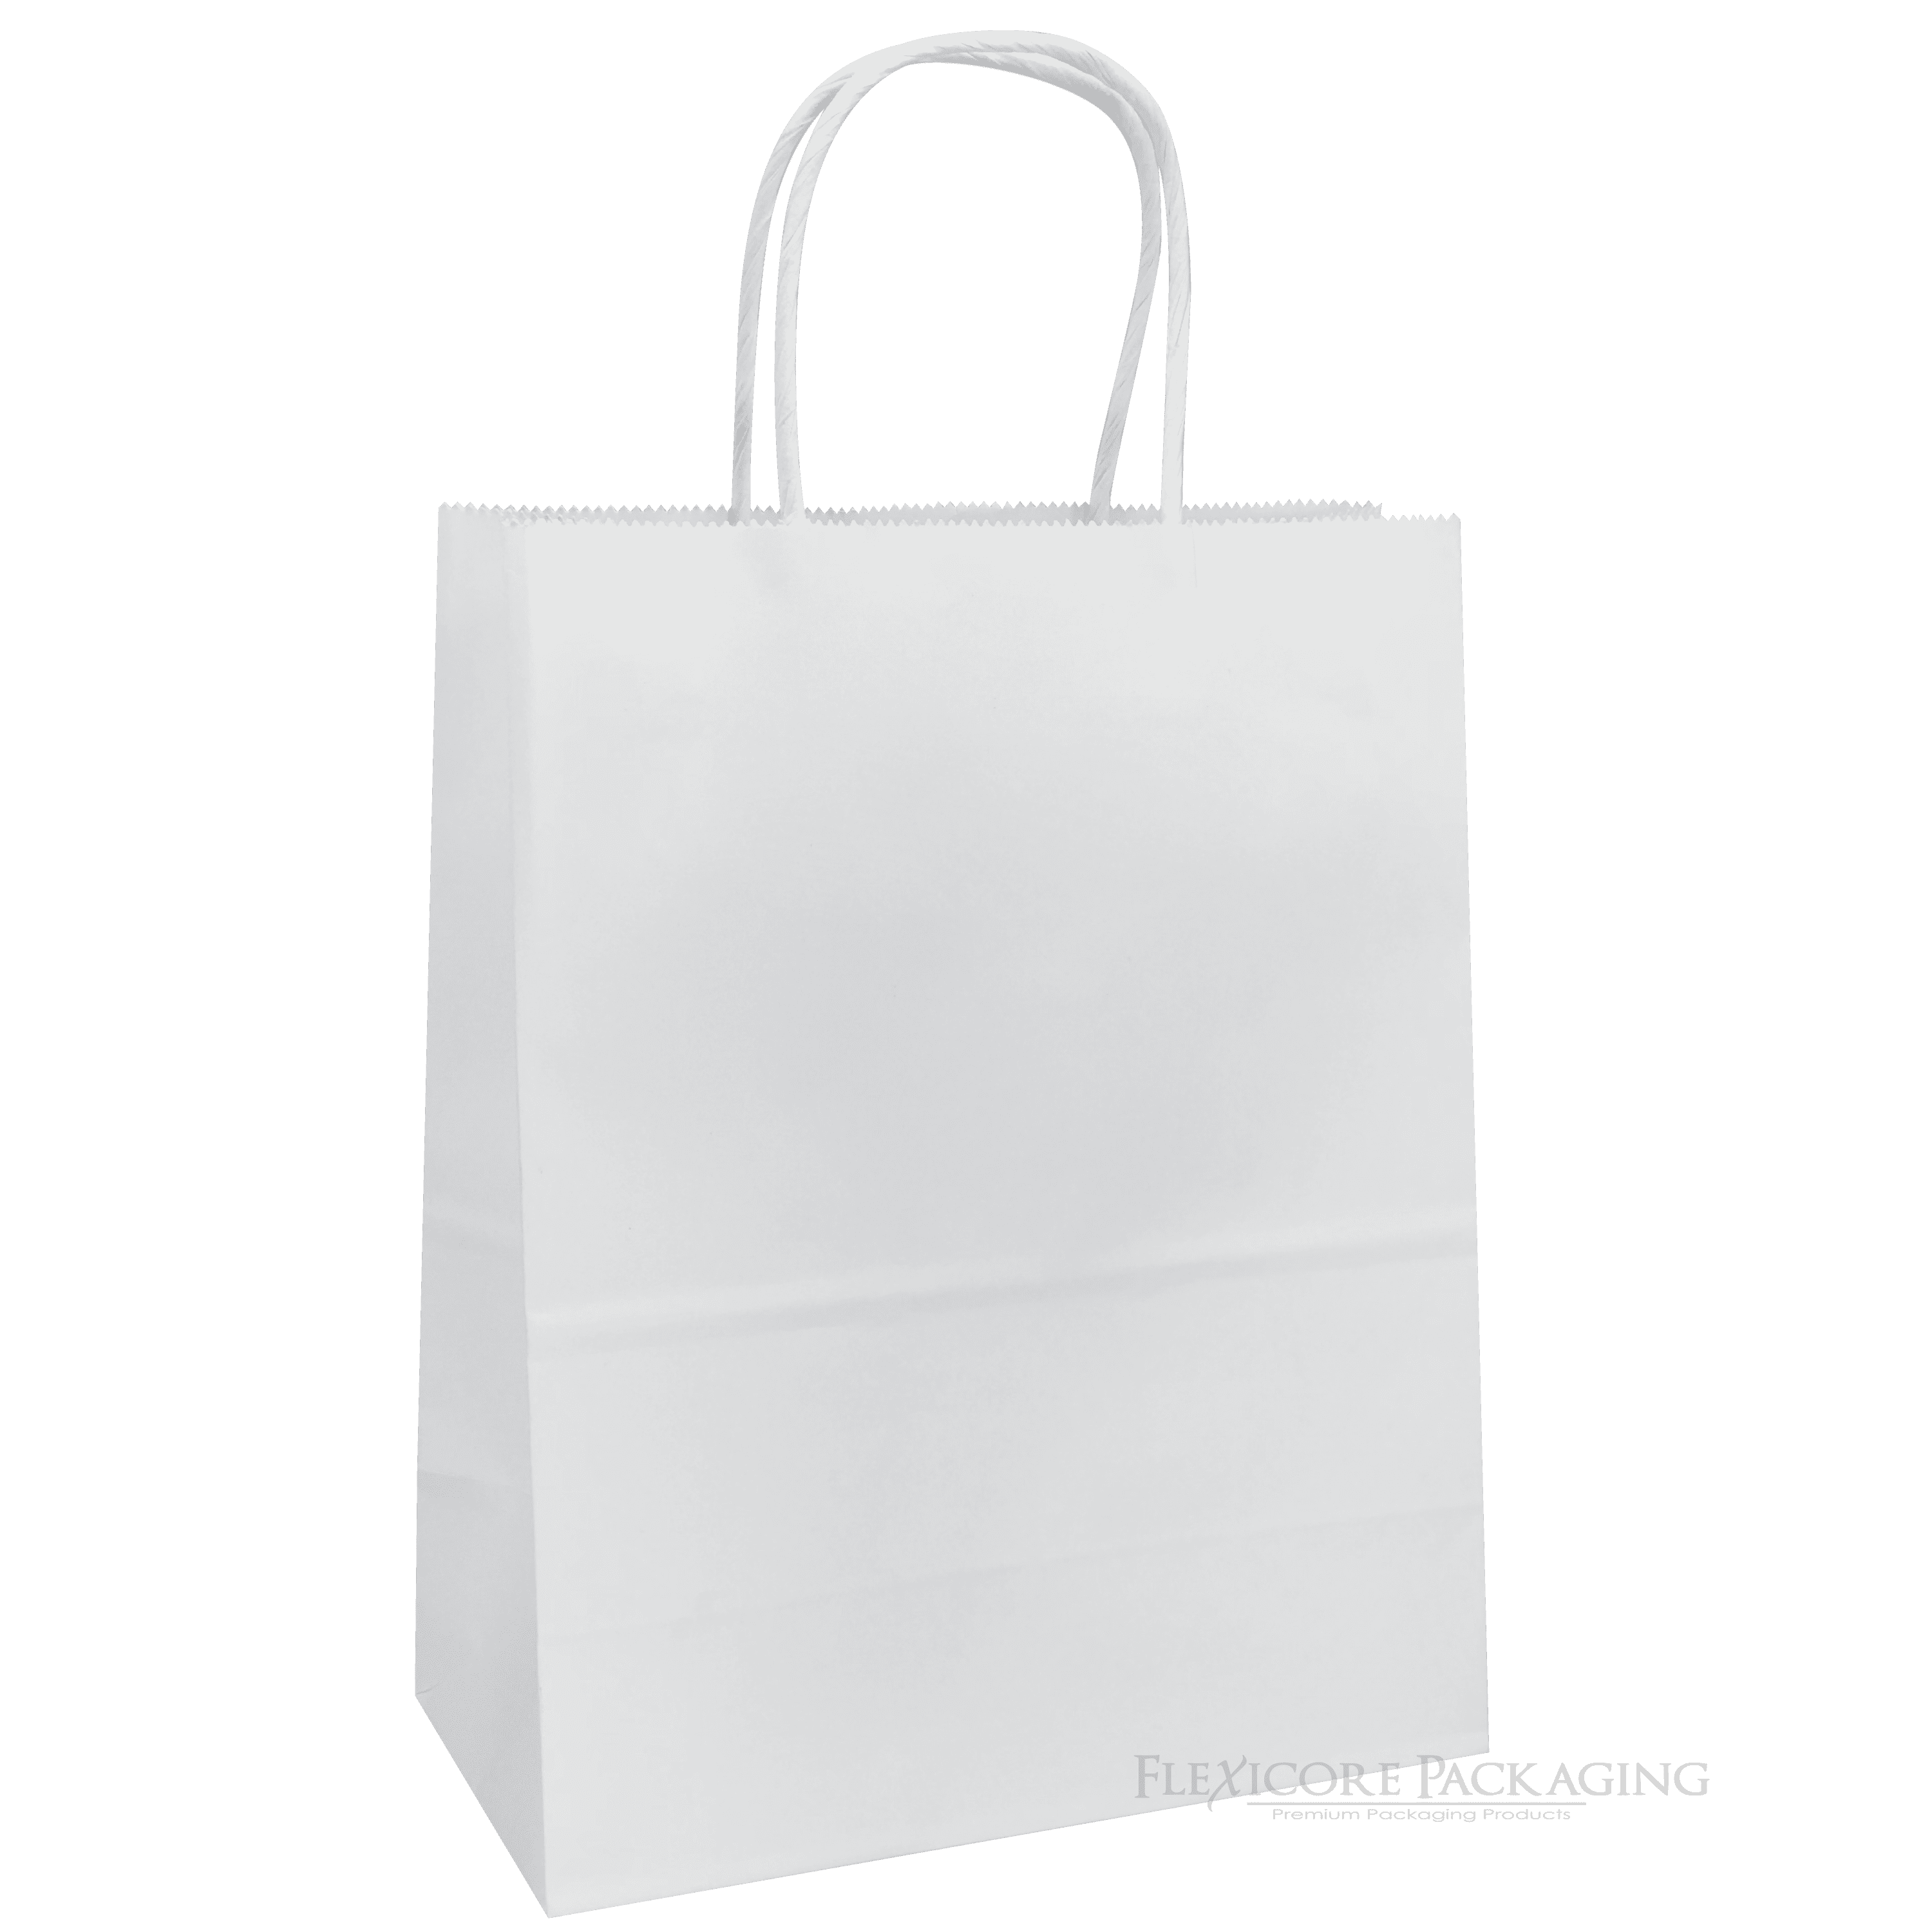 9pc Darice Paper Crafting Gift Bag Handles Bags 8×10×4 Black & White